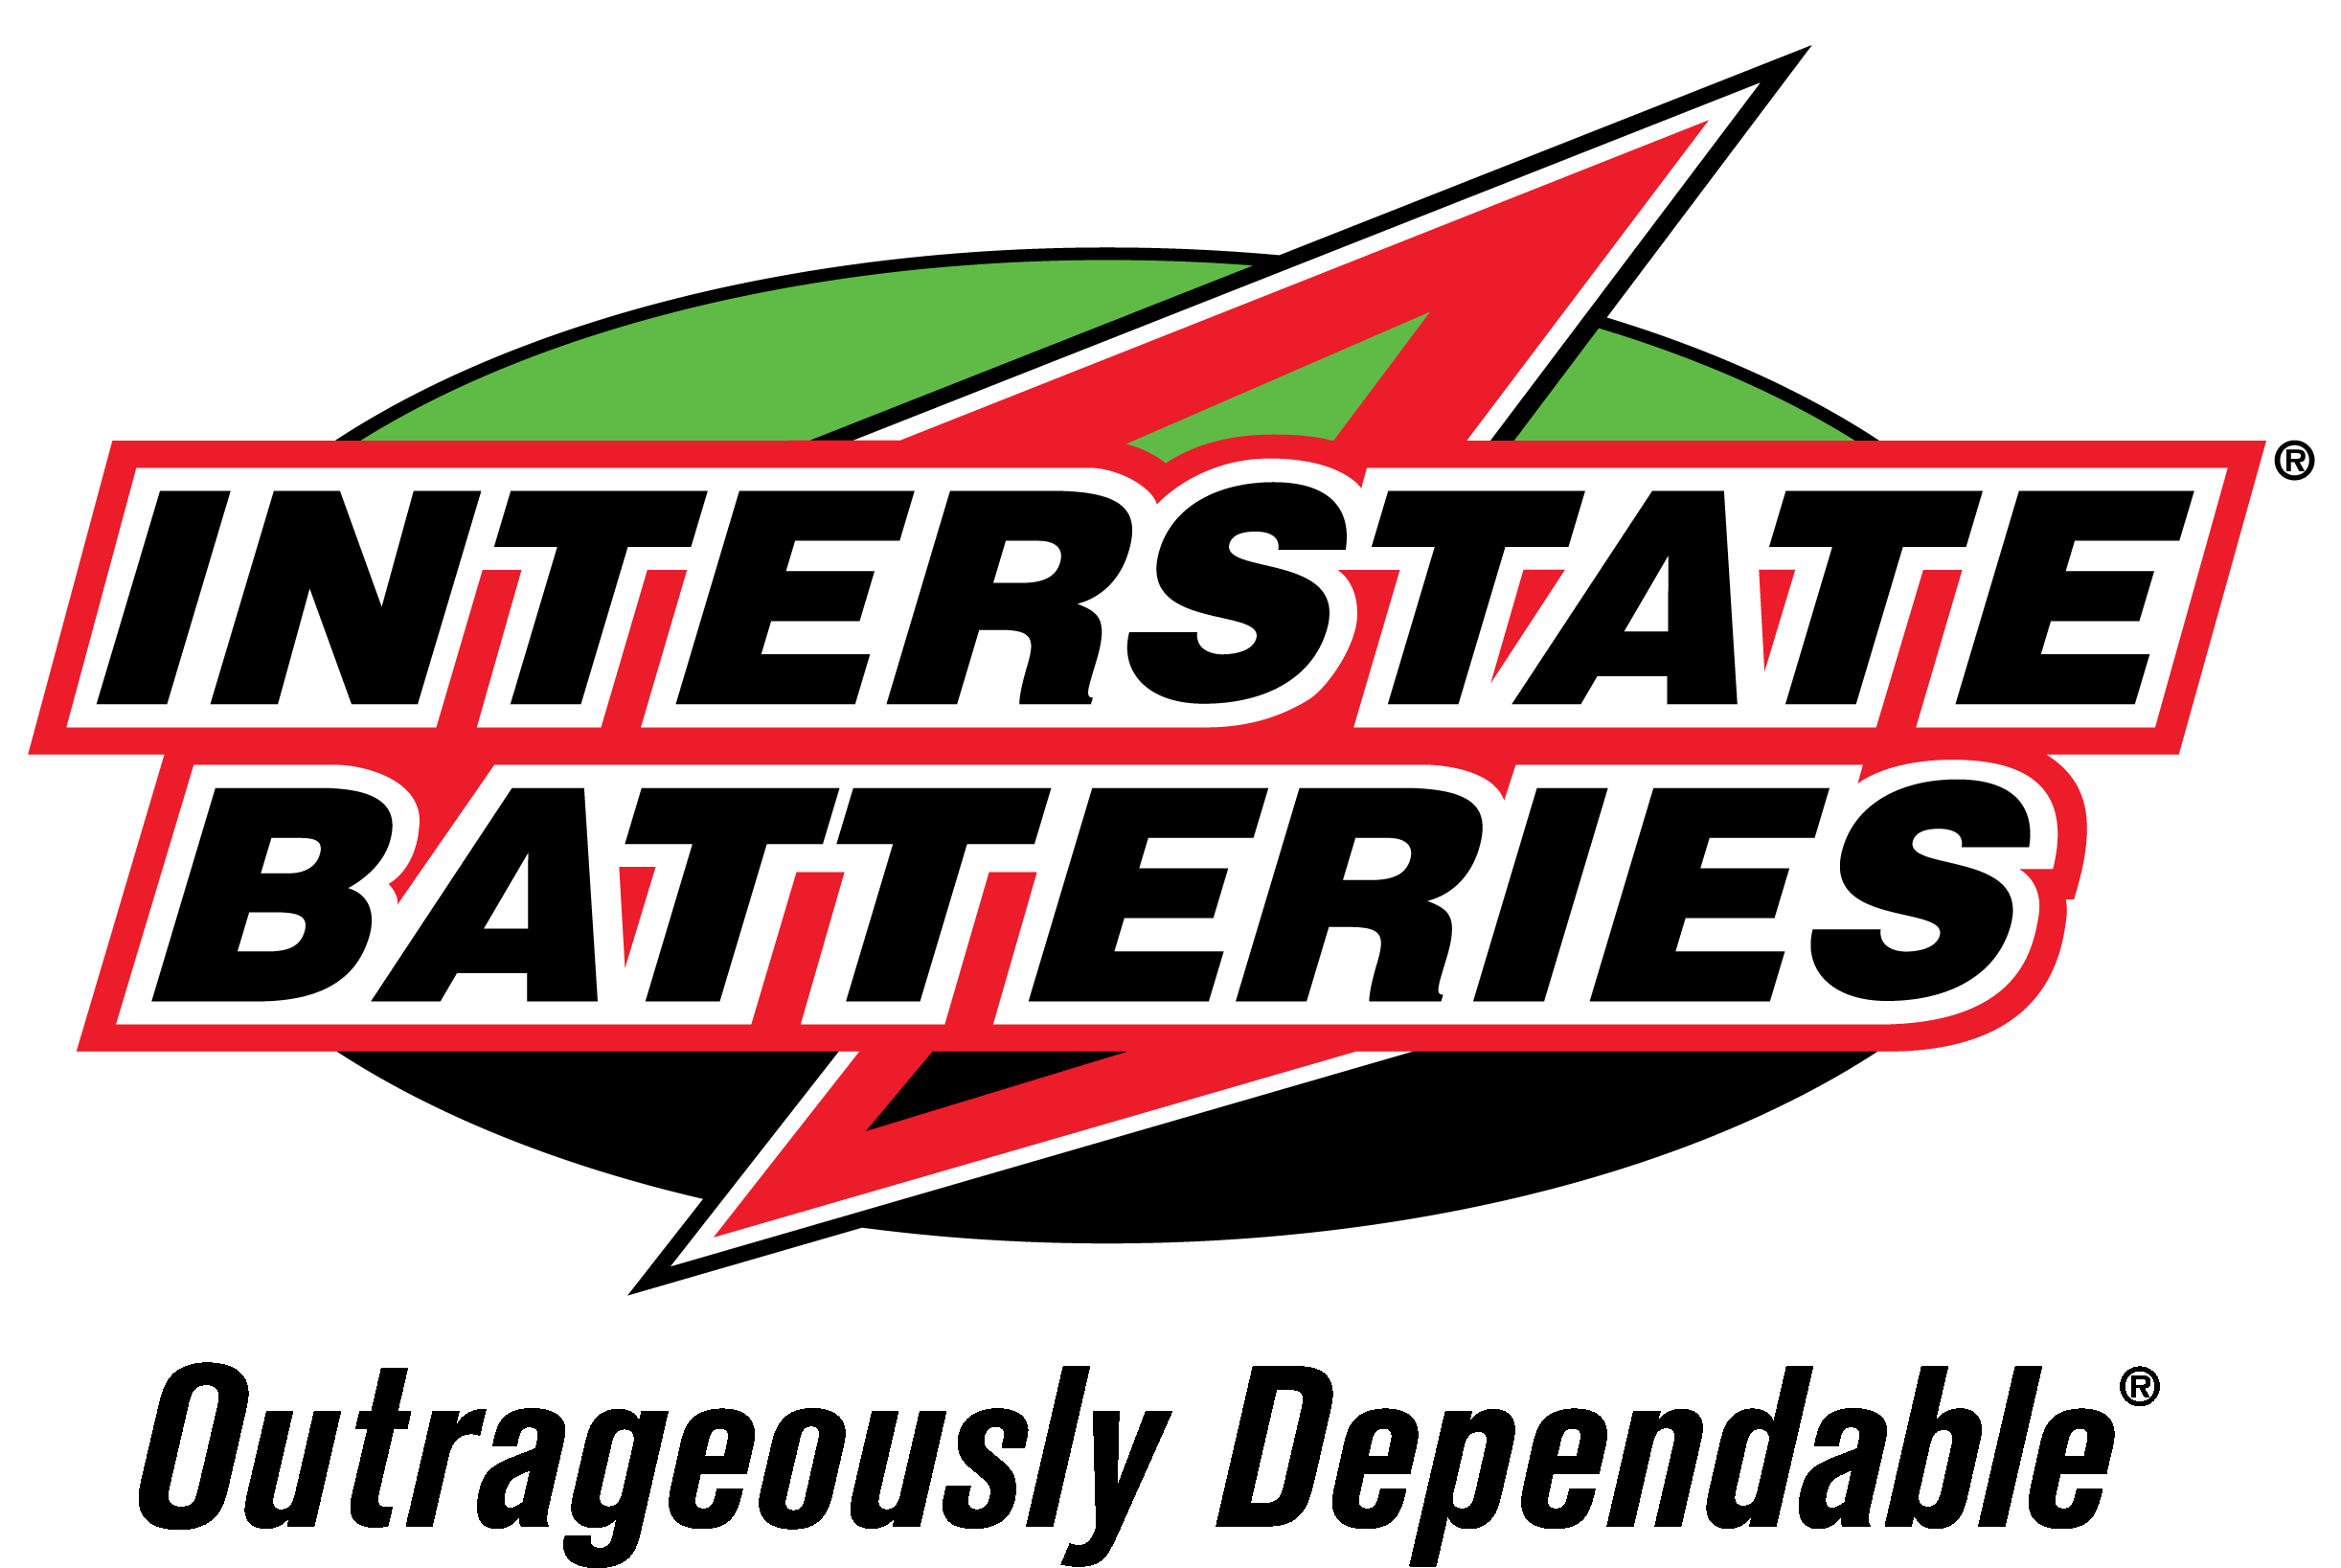 Interstate batteries logo